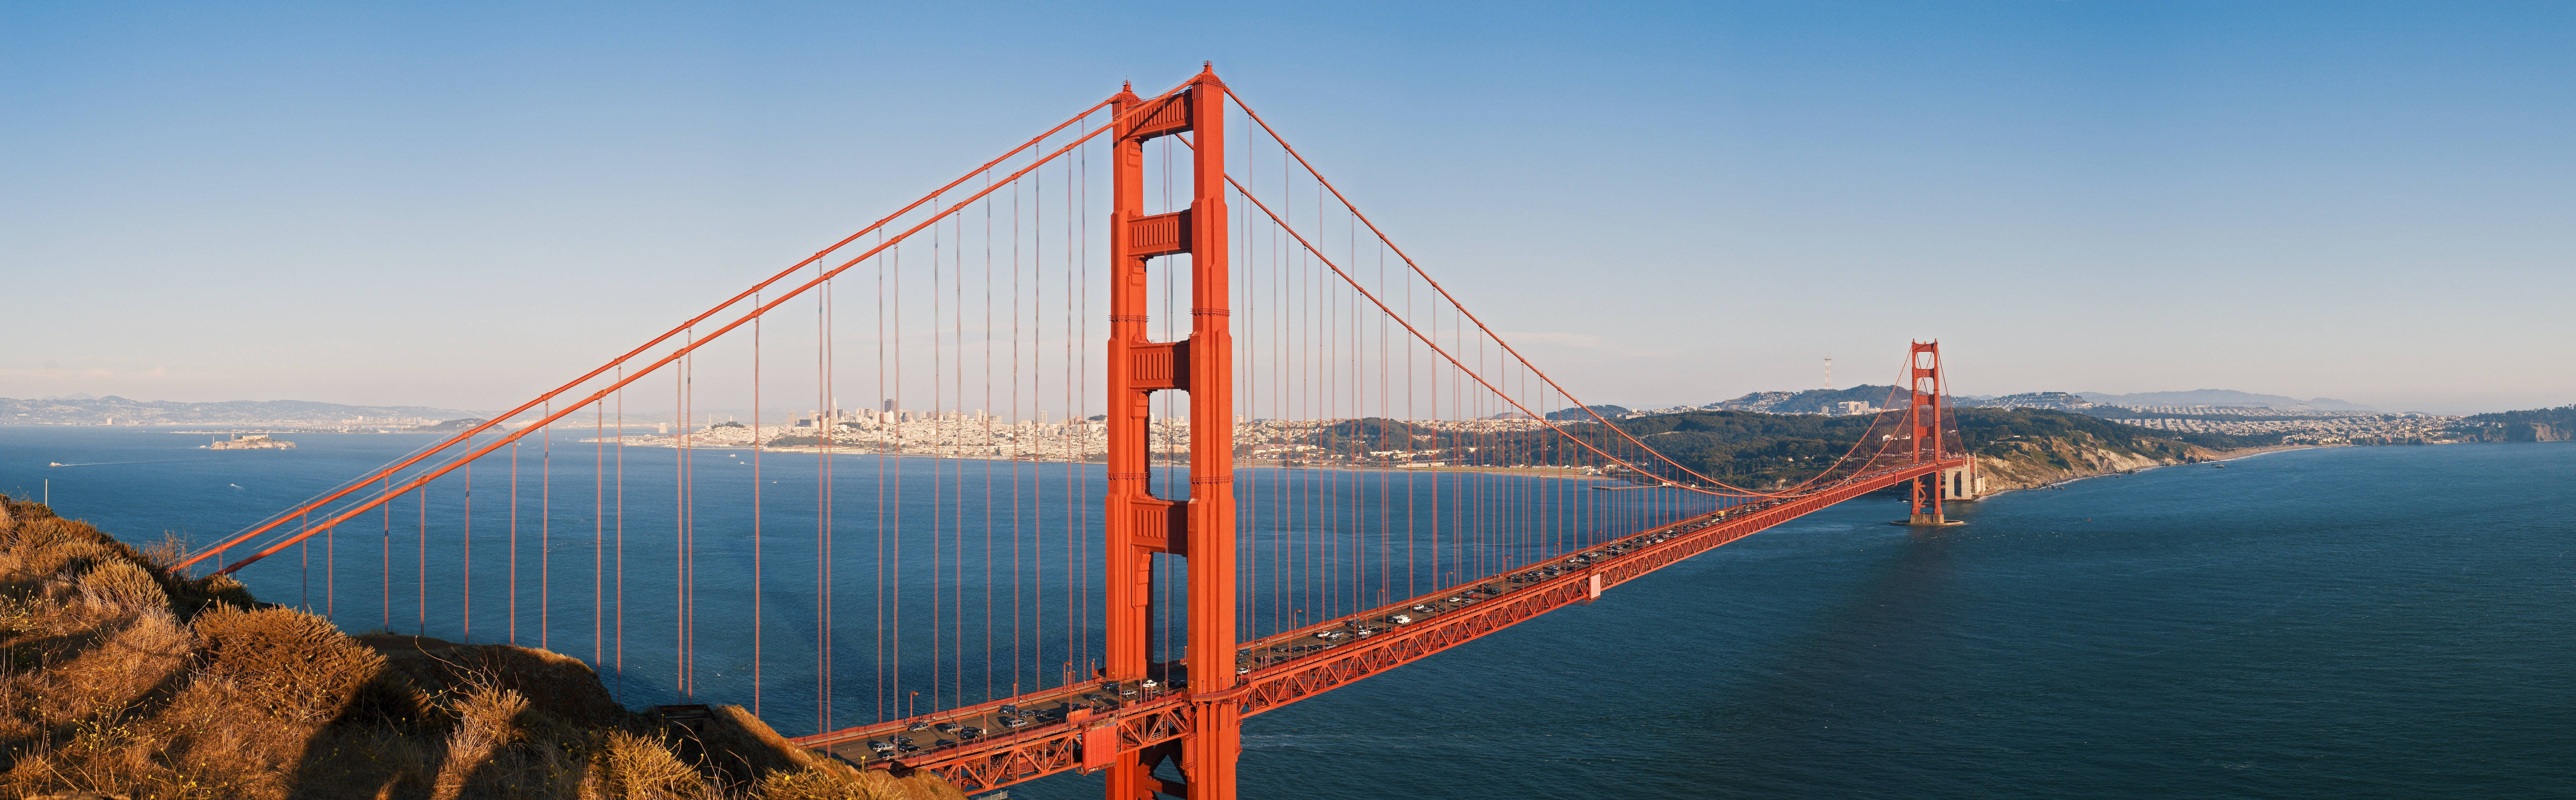 Golden Gate Bridge 8192 X 2544 Wallpaper